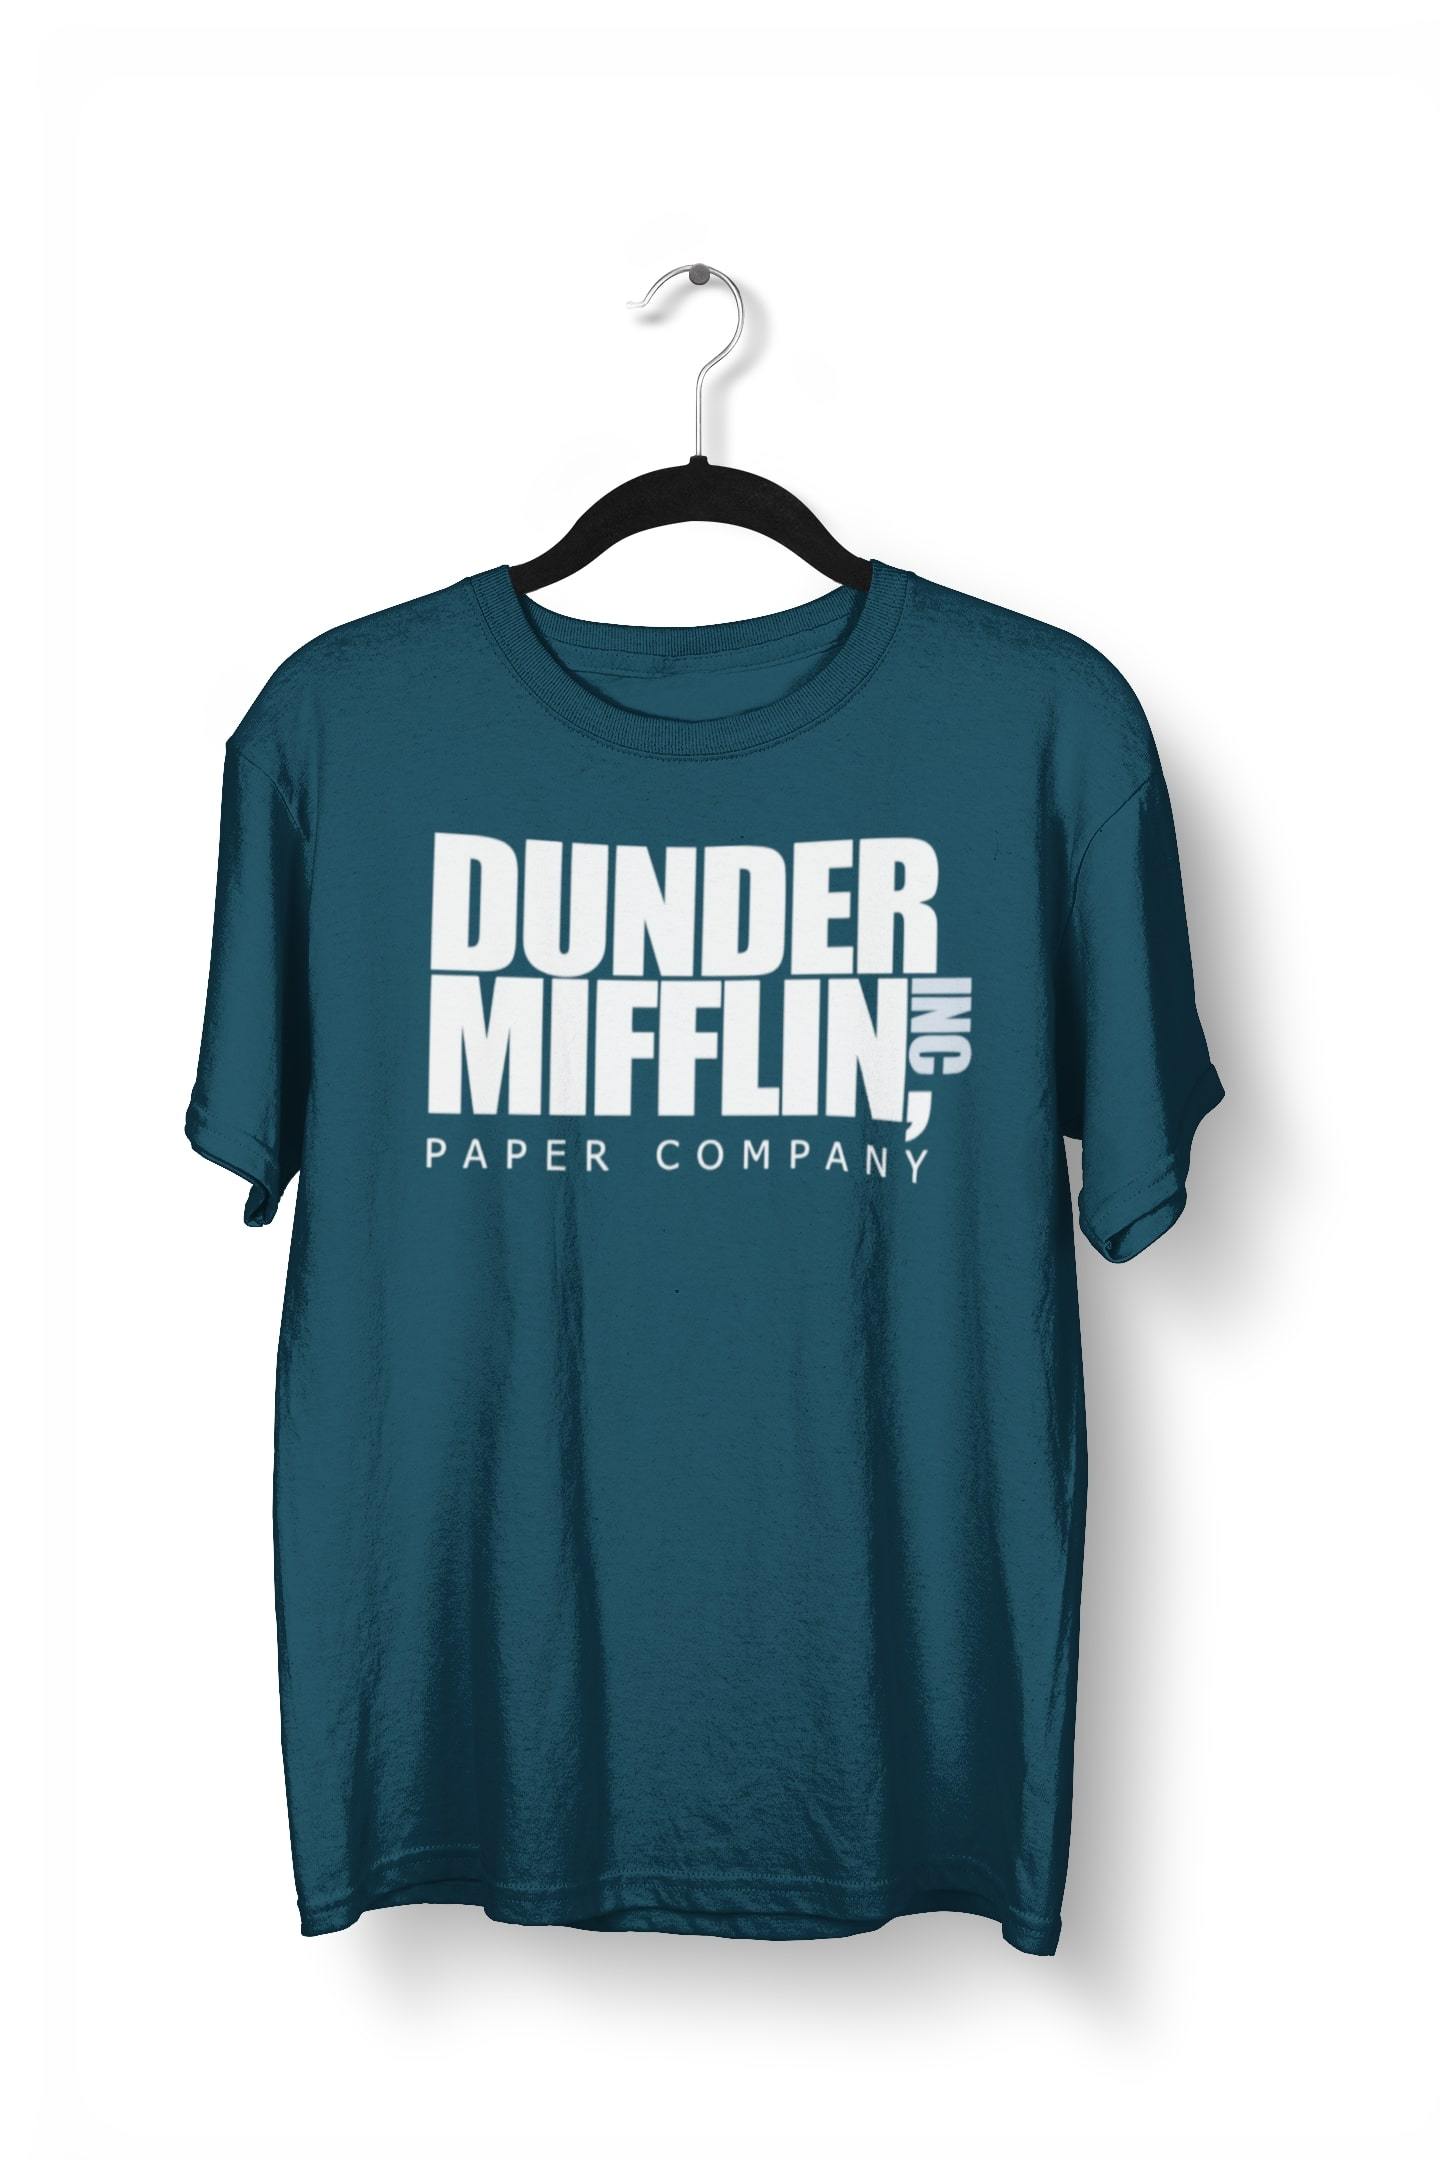 thelegalgang,Dunder Mifflin The Office T-Shirt,.